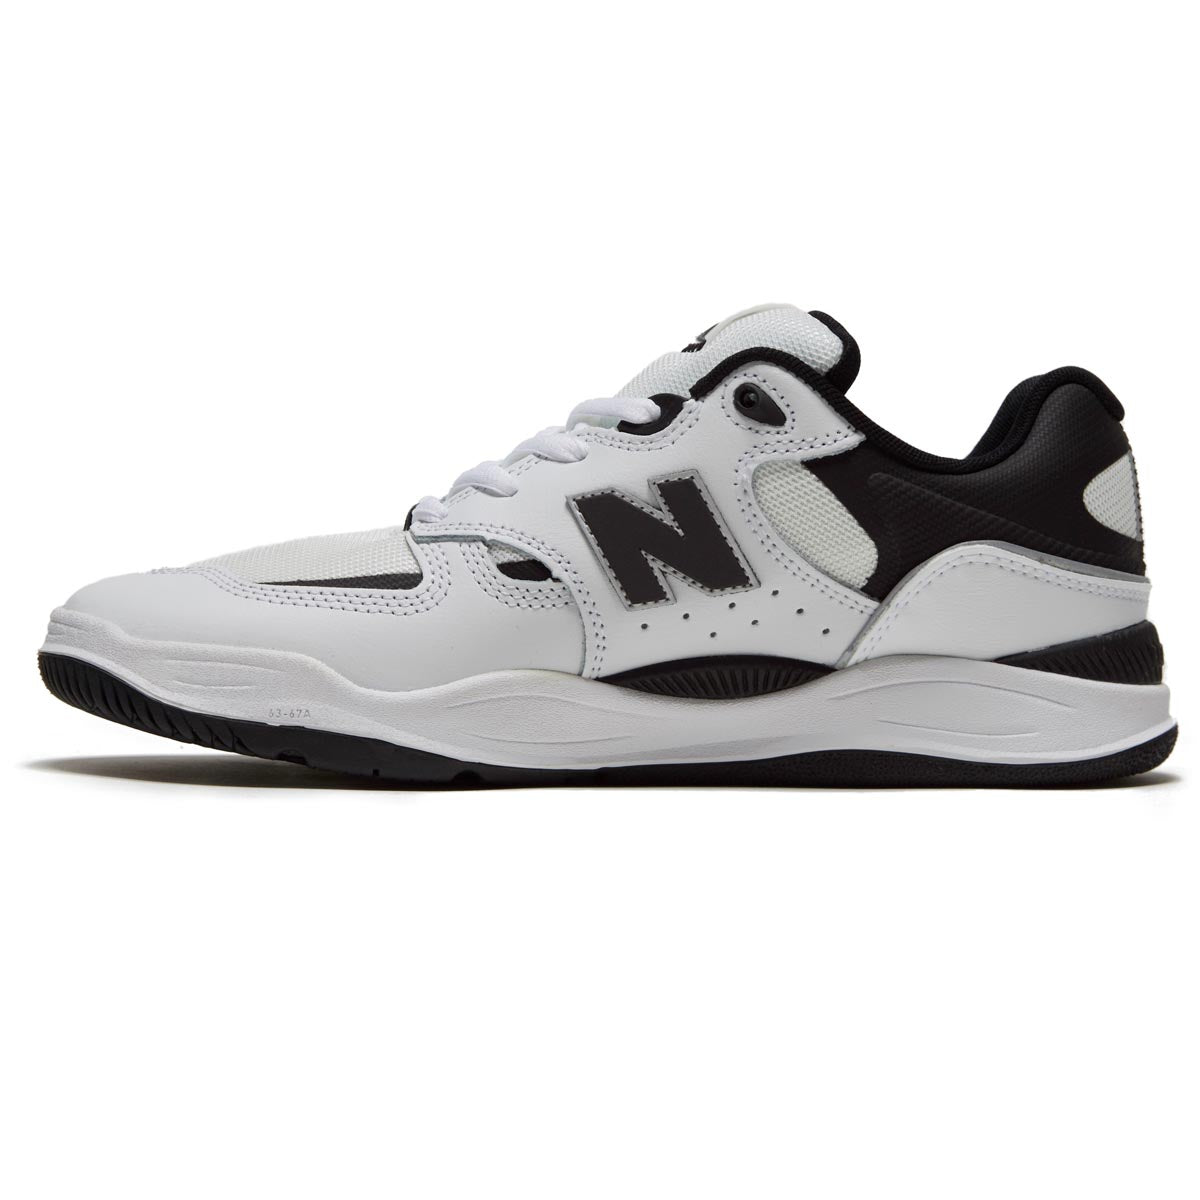 New Balance 1010 Tiago Shoes - White/Black/White image 2